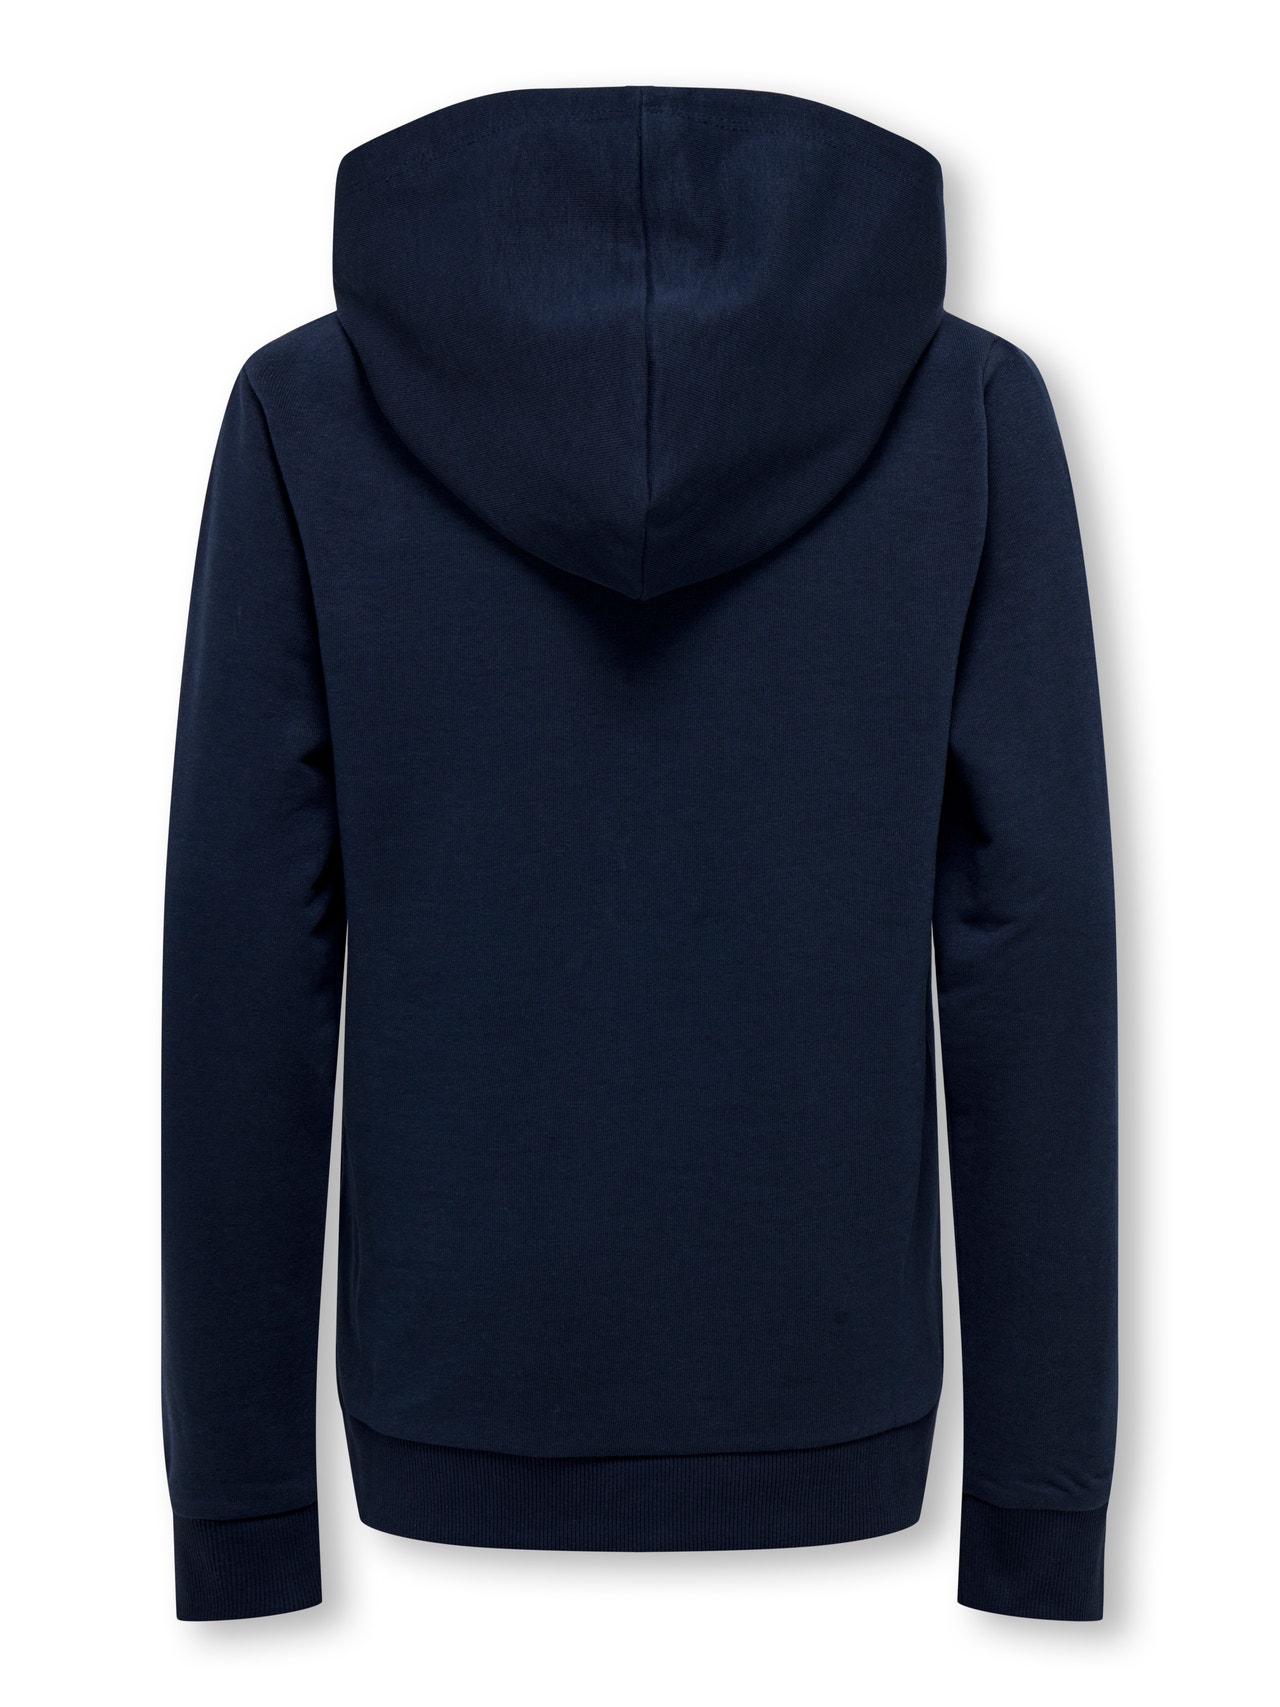 ONLY Regular Fit Hoodie Sweatshirt -Navy Blazer - 15292660